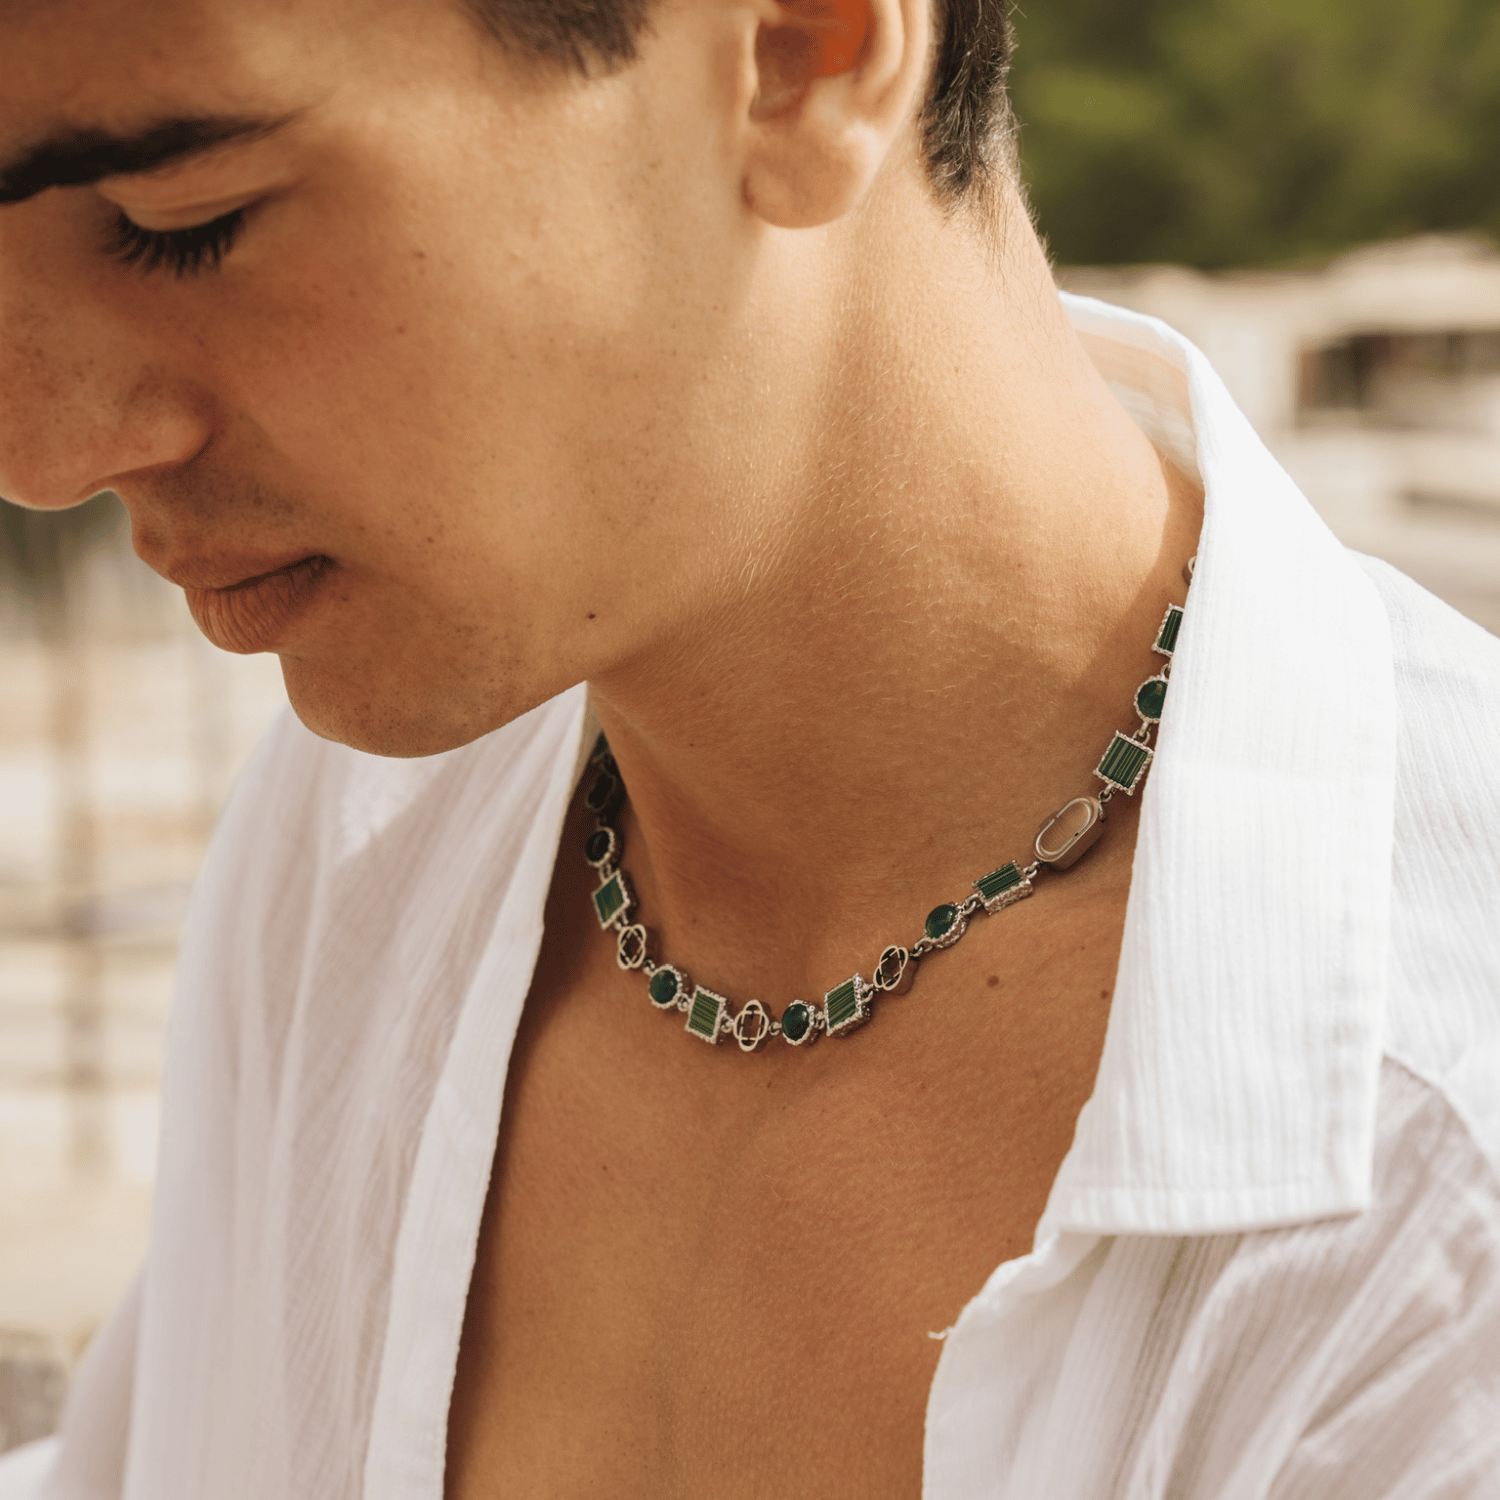 Green Quartz Gemstone Necklace (Silver)